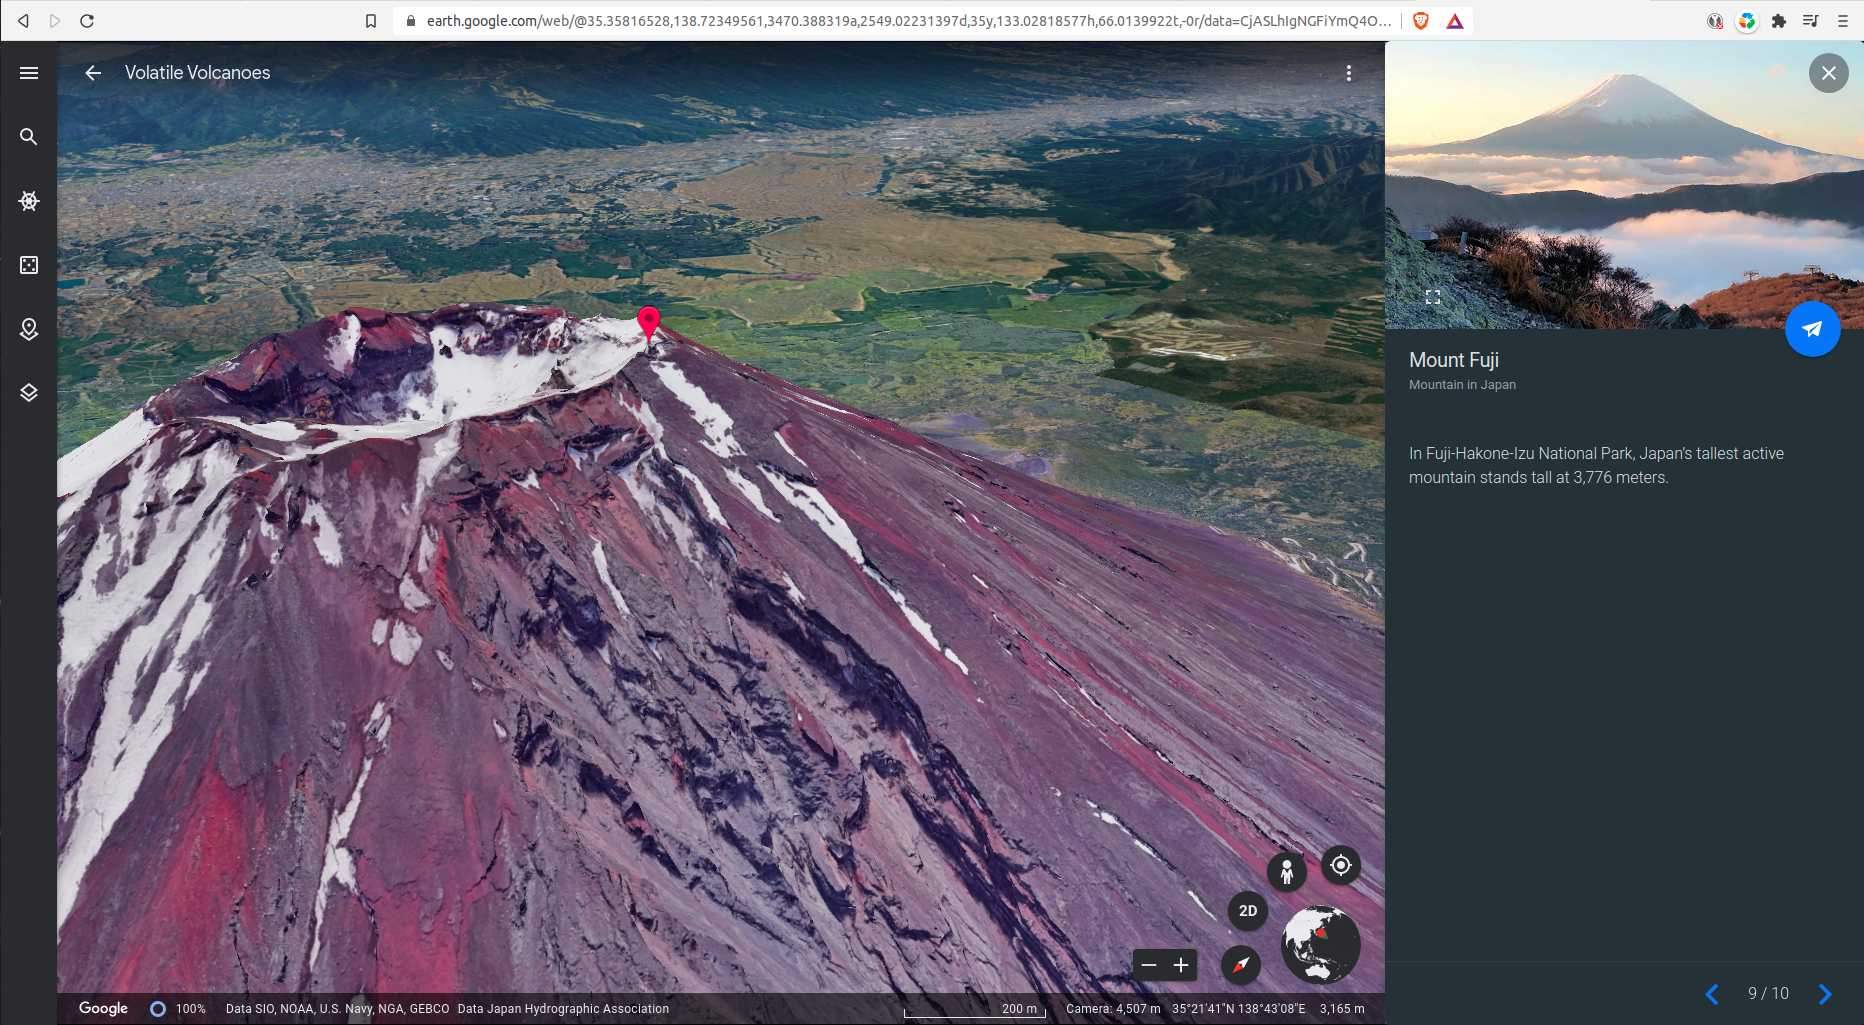 A volcano in Google Earth